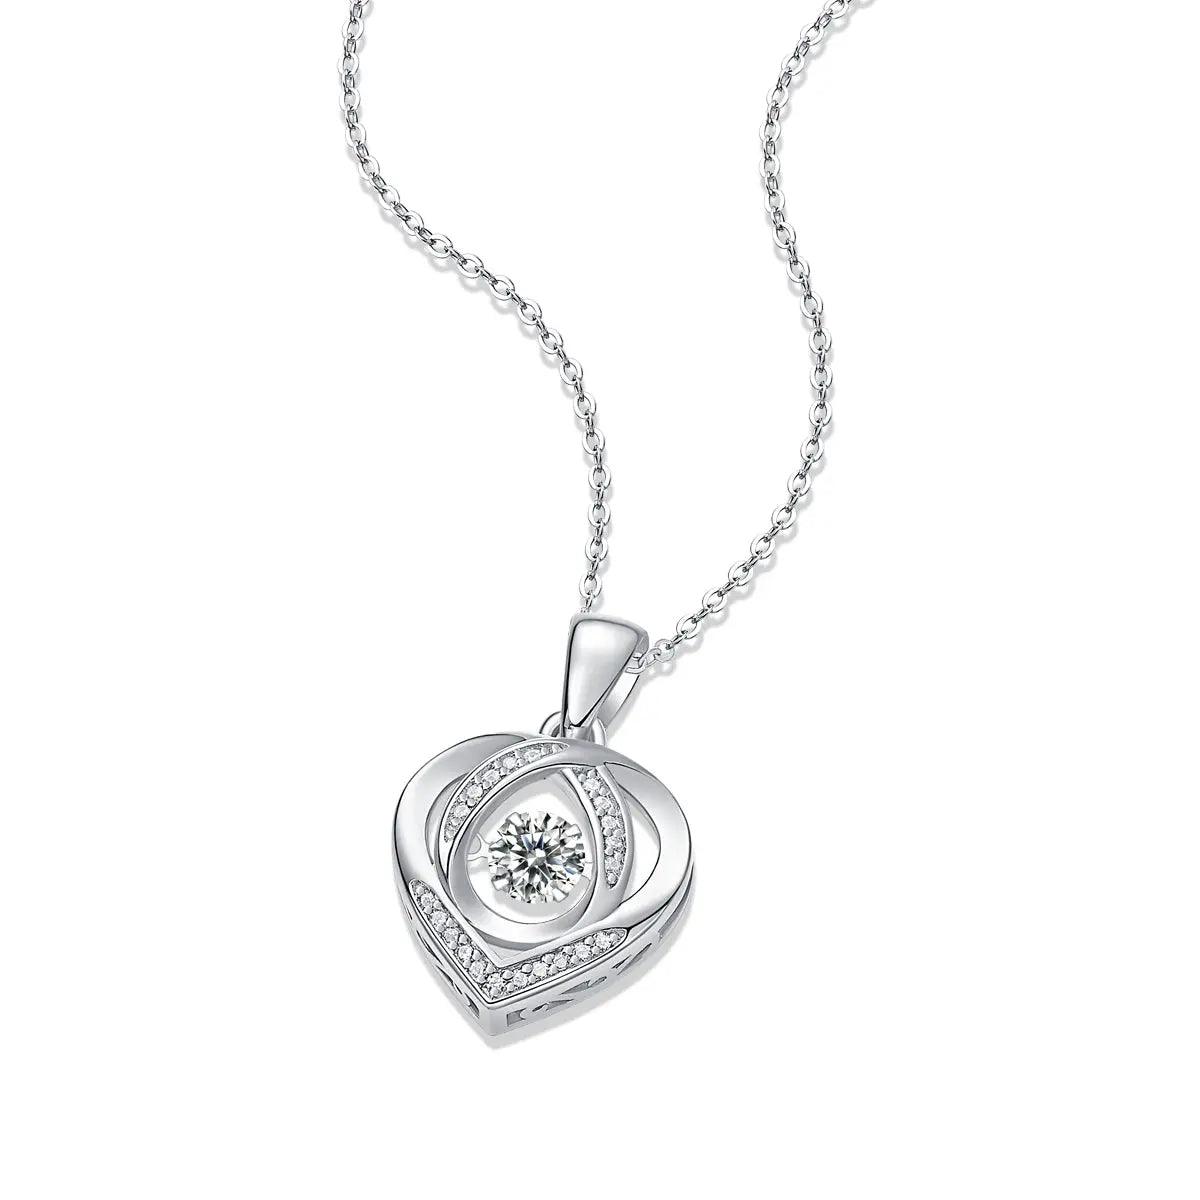 FairyLocus “Rhythmic Heart” 0.5ct Moissanite Pendant Necklace Sterling Silver D Color VVS1 Clarity Brilliant Round Cut Lab Created Diamond Necklace FLZZNLMS13 FairyLocus